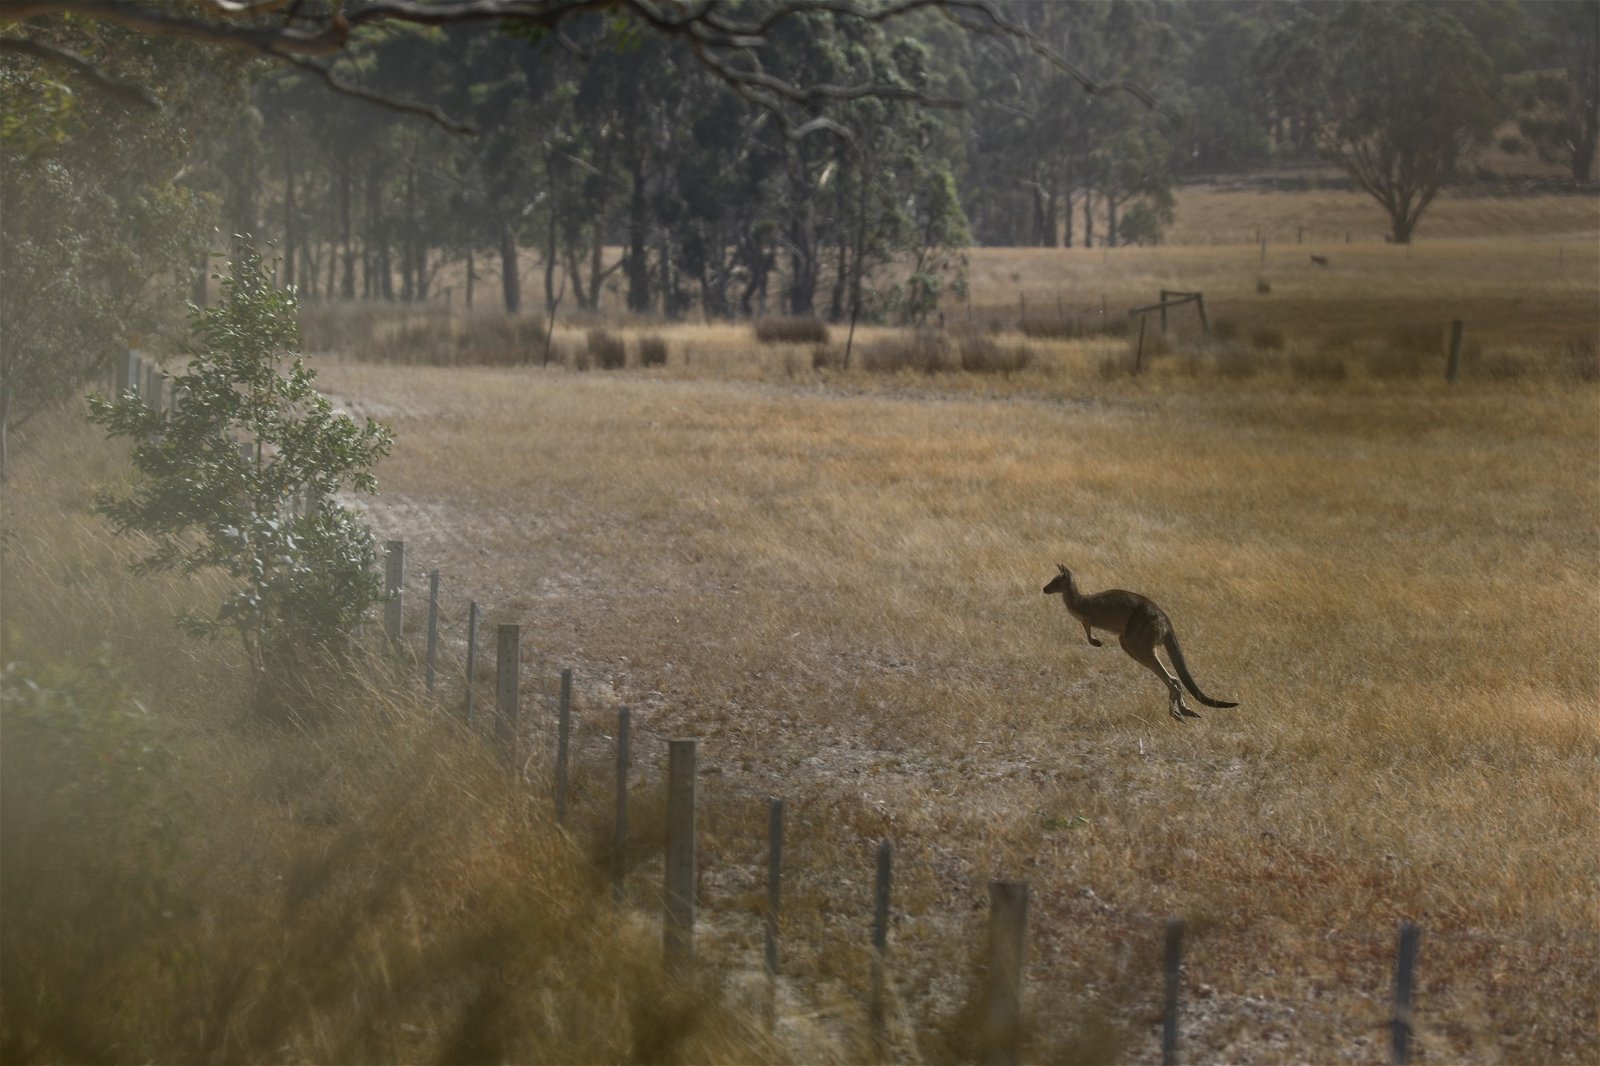 A kangaroo hops across a dry paddock.